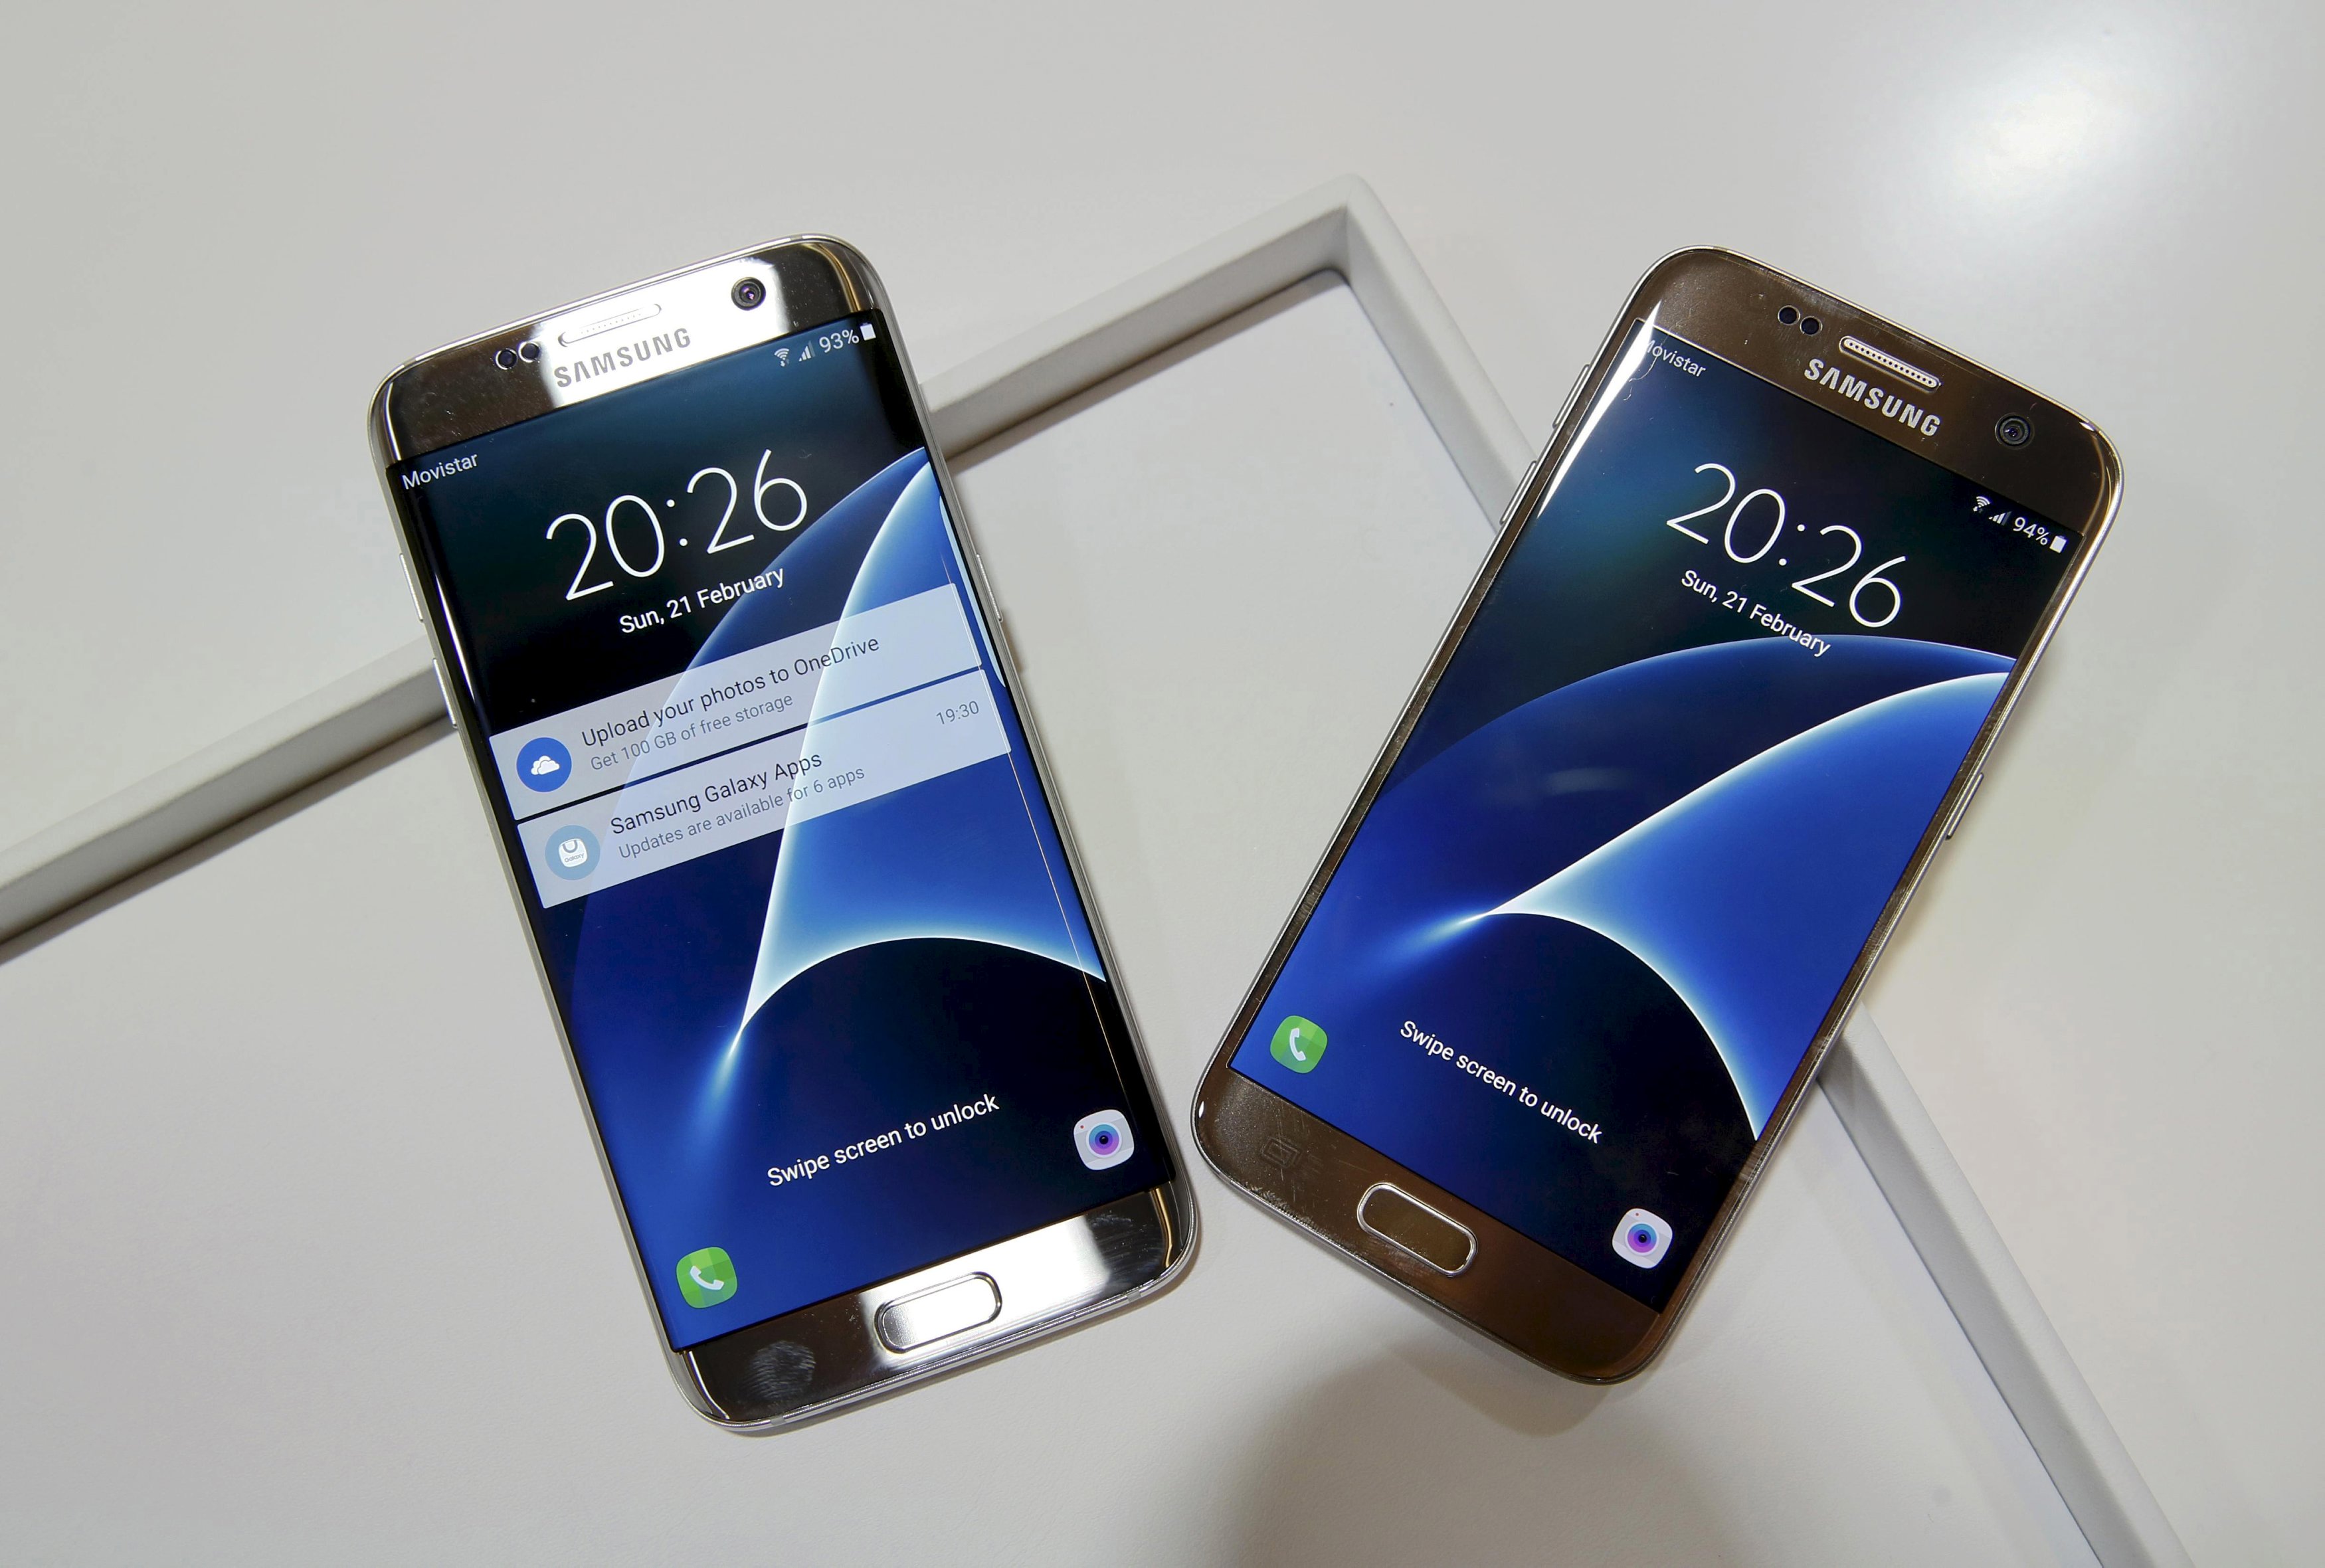 S7: Τι φέρνει το smartphone της Samsung με τις υψηλότερες προδιαγραφές